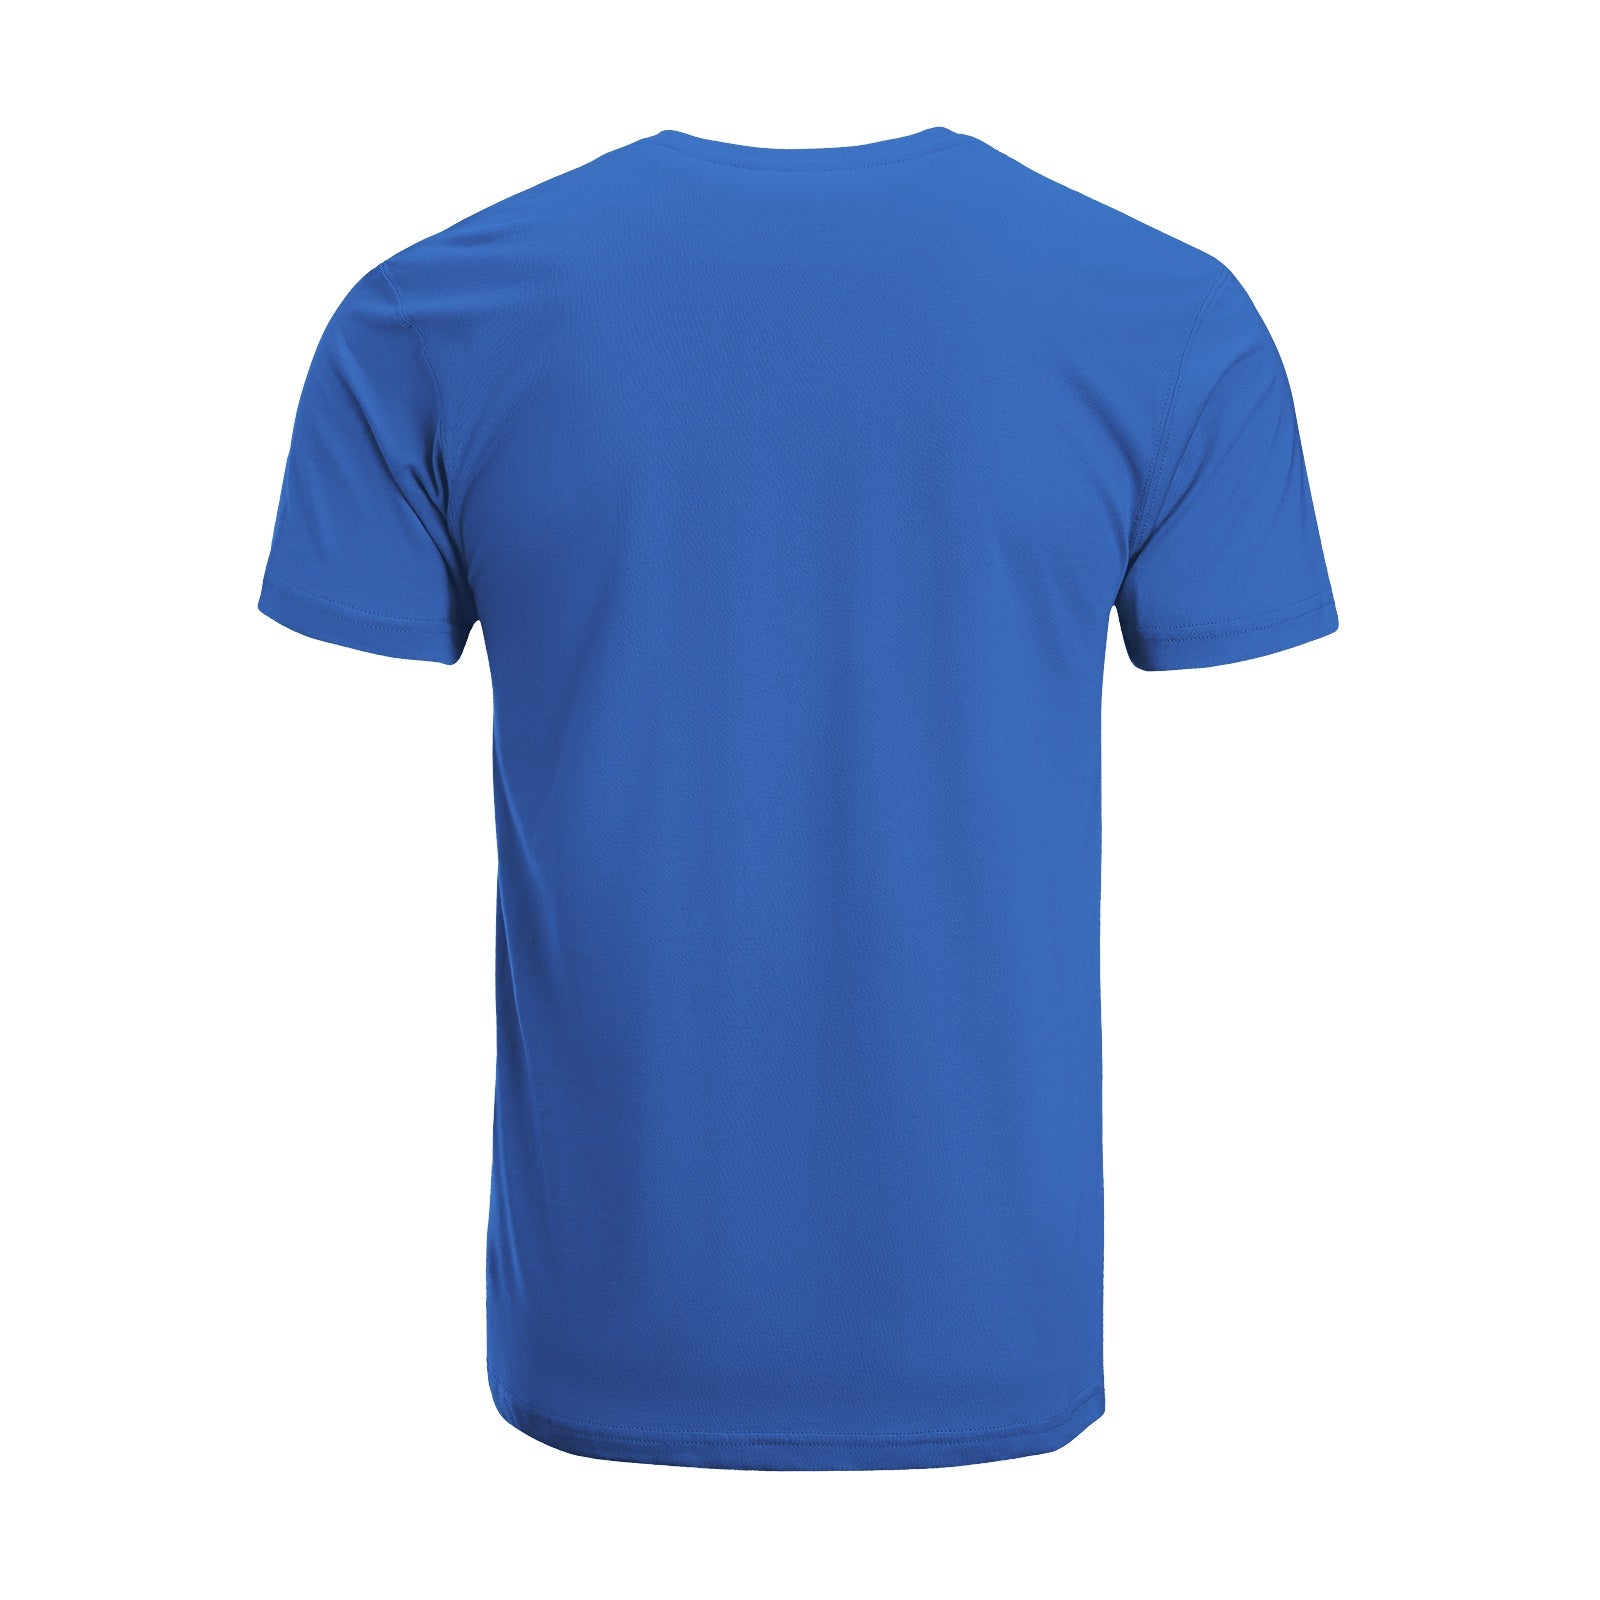 Unisex Short Sleeve Crew Neck Cotton Jersey T-Shirt CAT 40 - Tara-Outfits.com